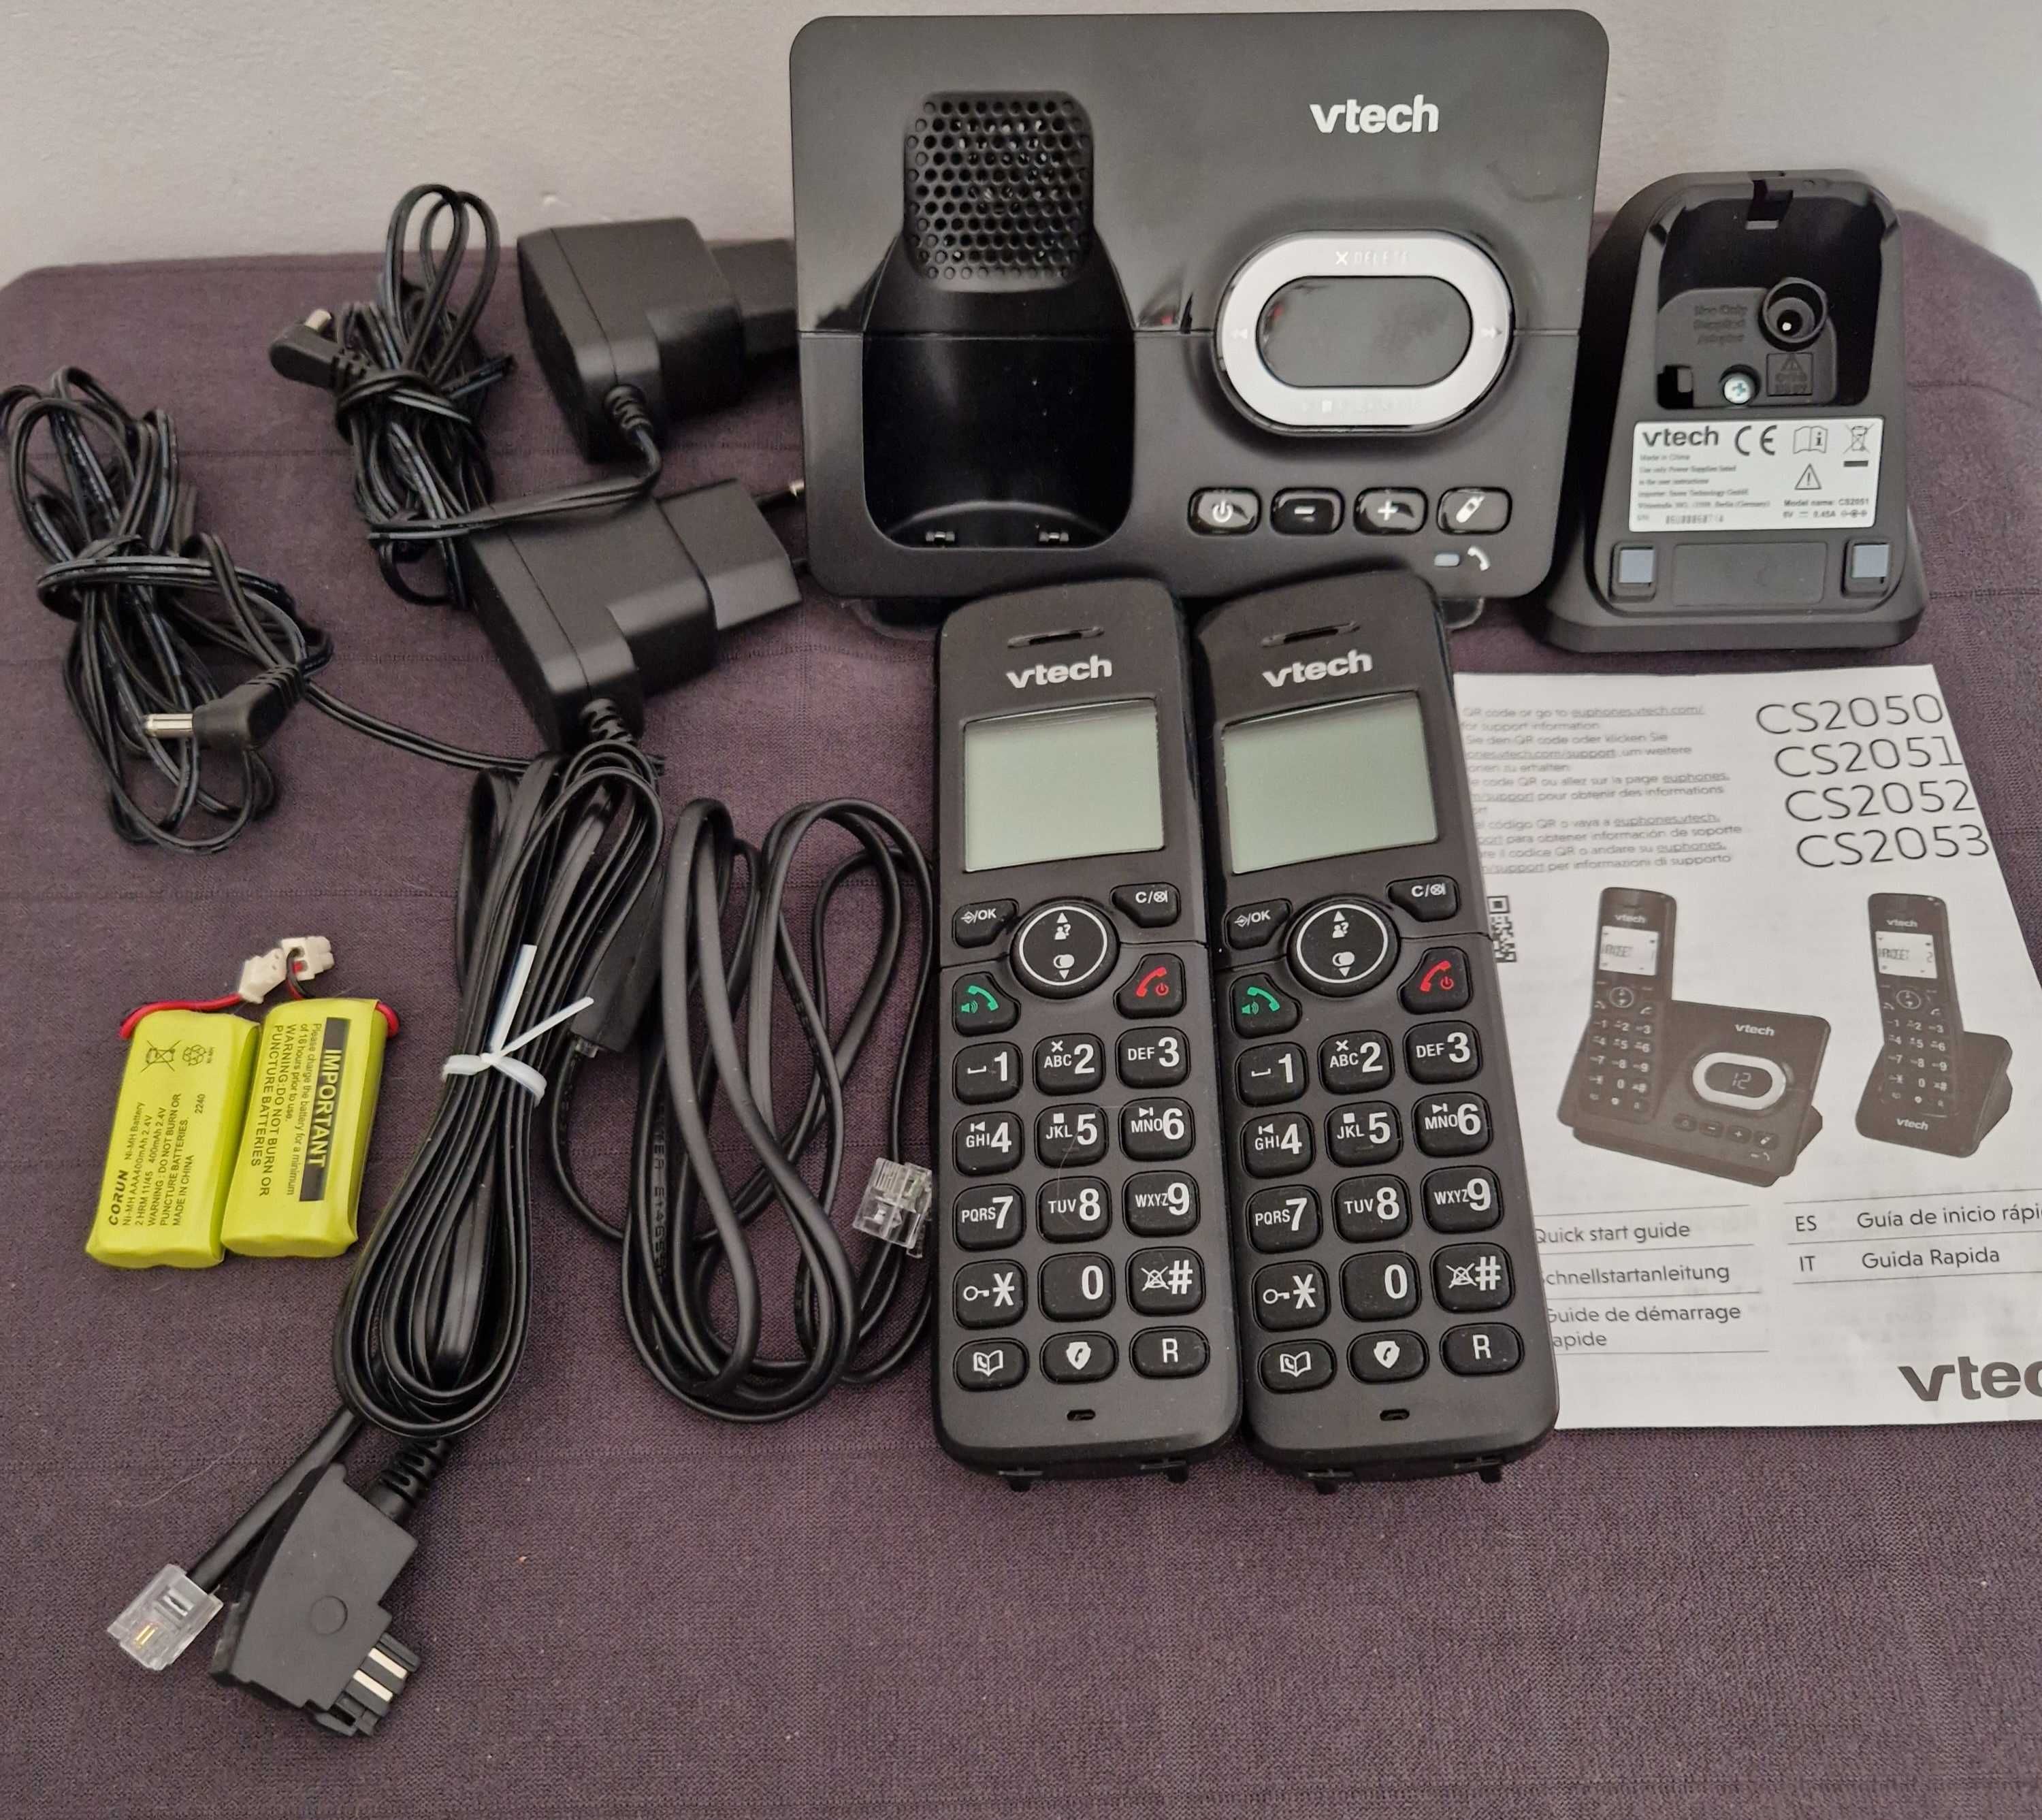 VTECH CS2051, Telefon bezprzewodowy